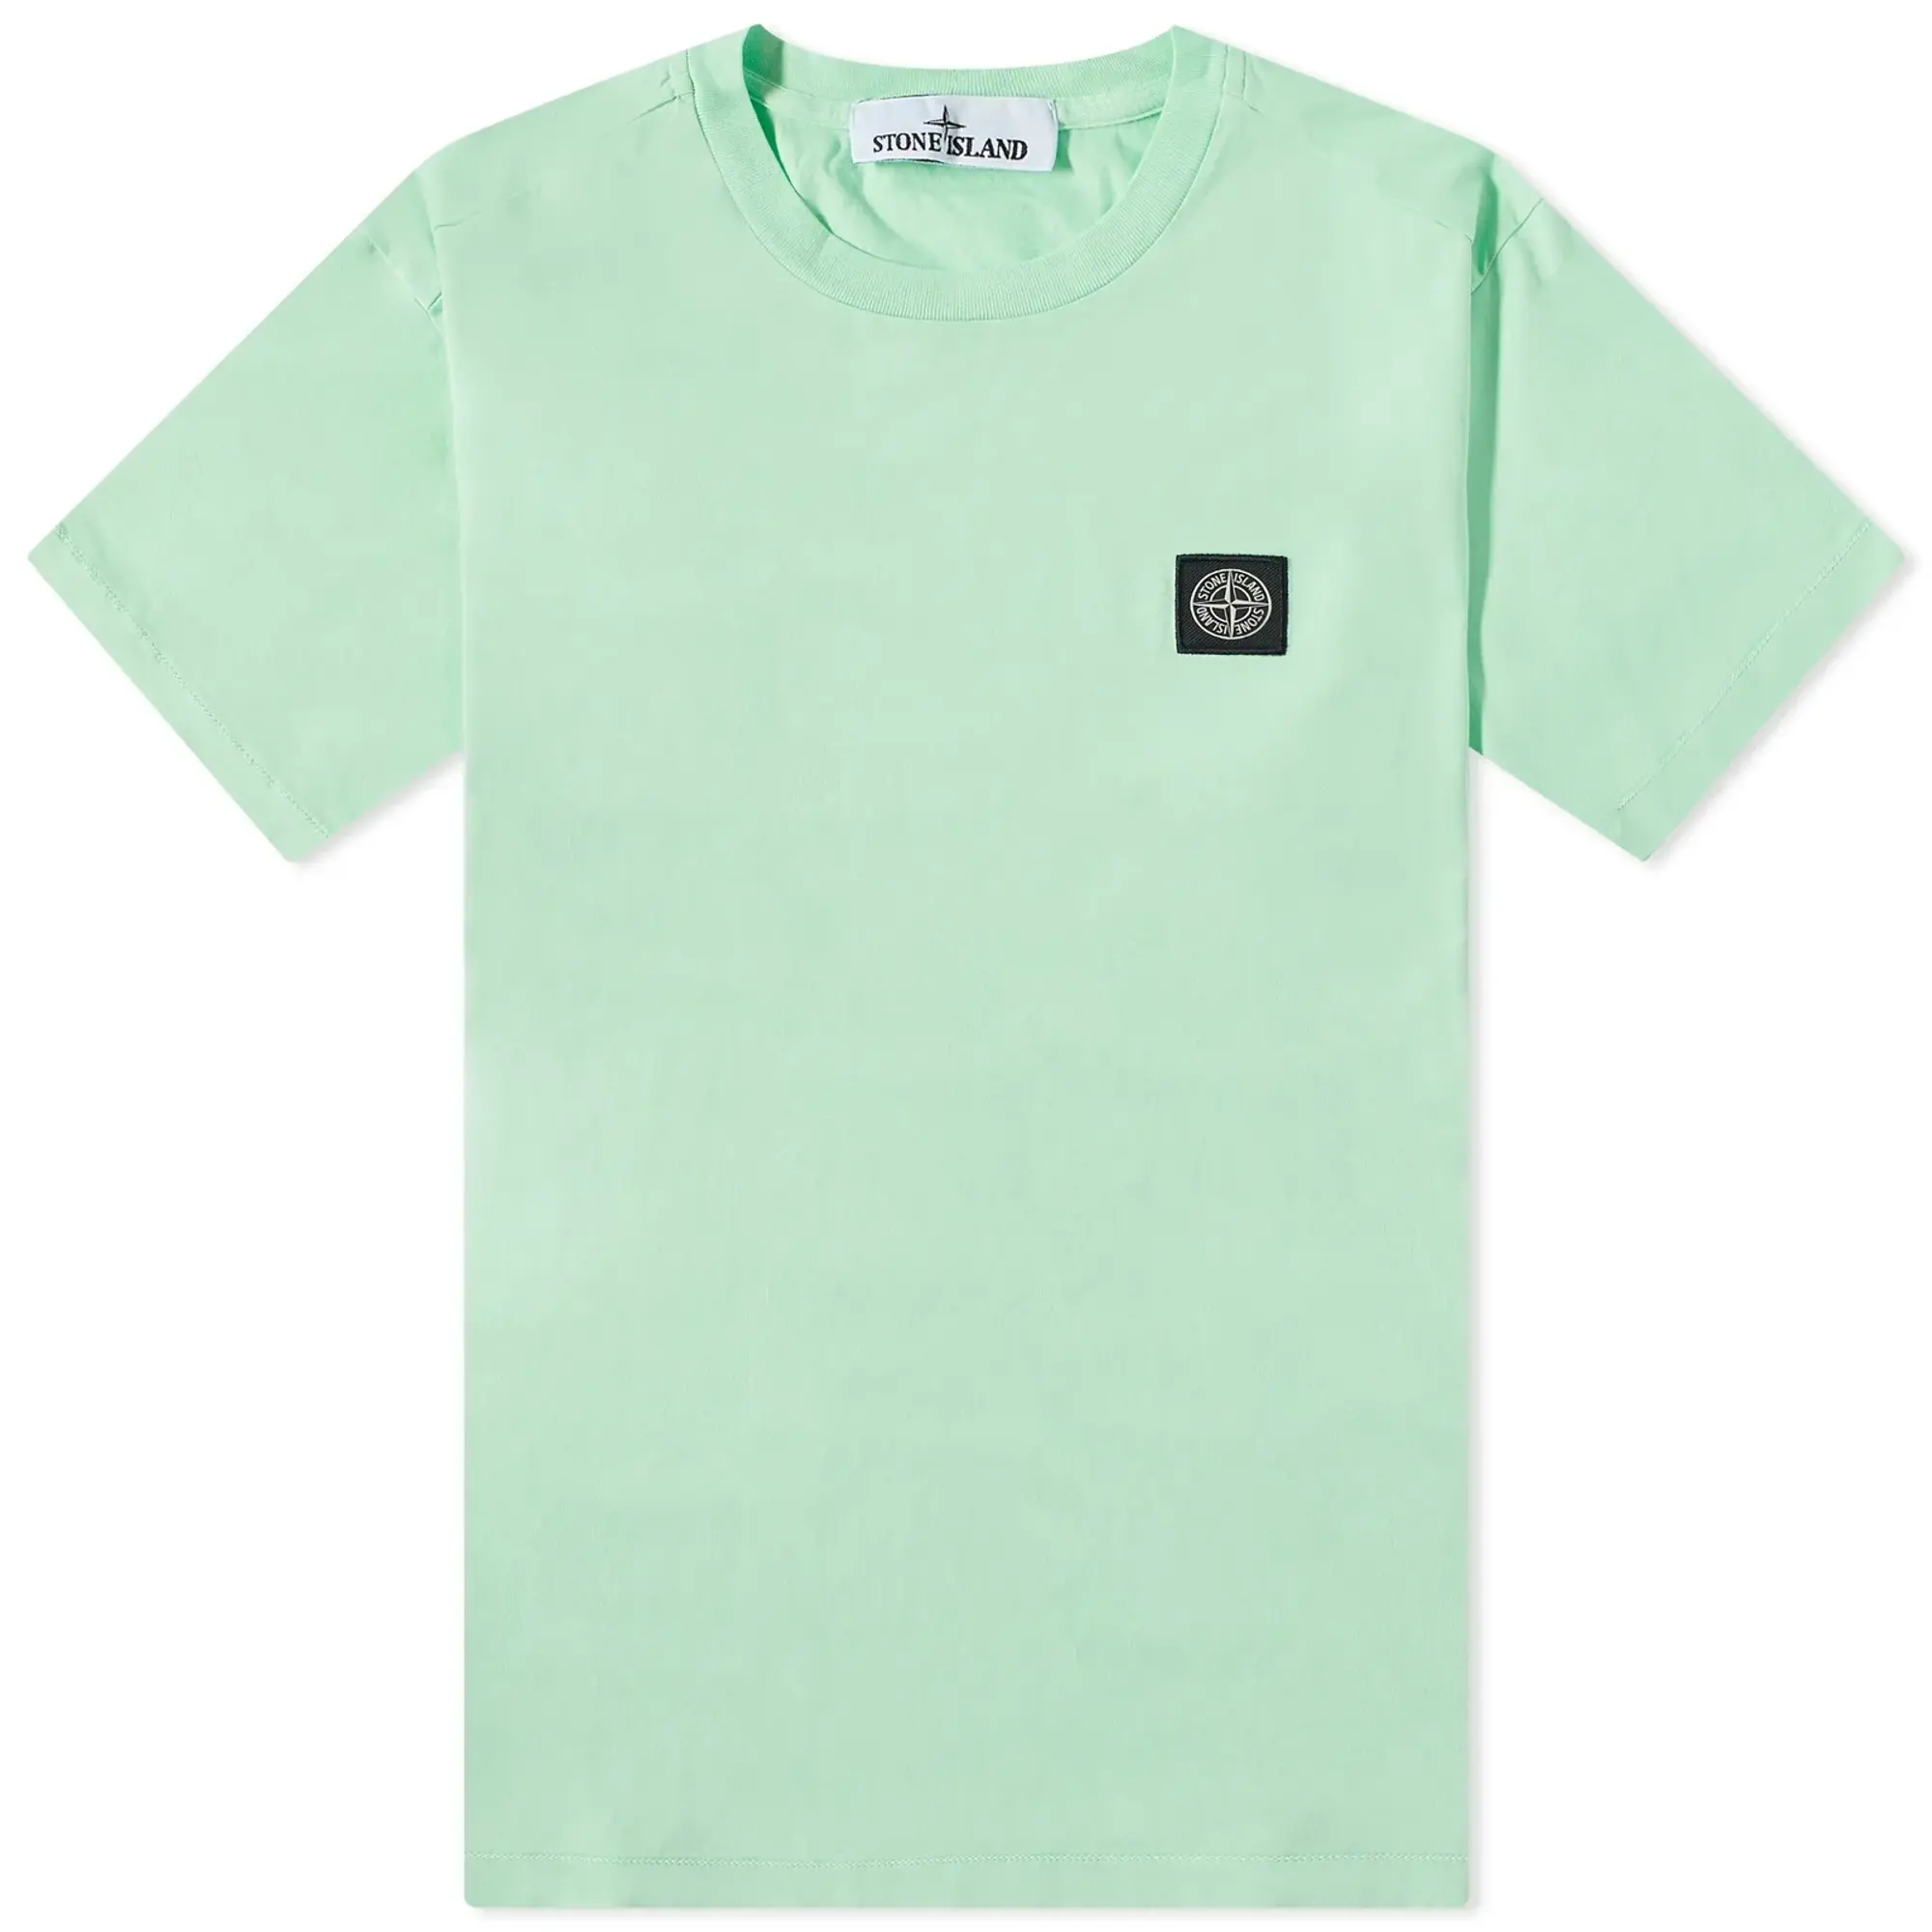 Stone Island Men's Patch T-Shirt Light Green